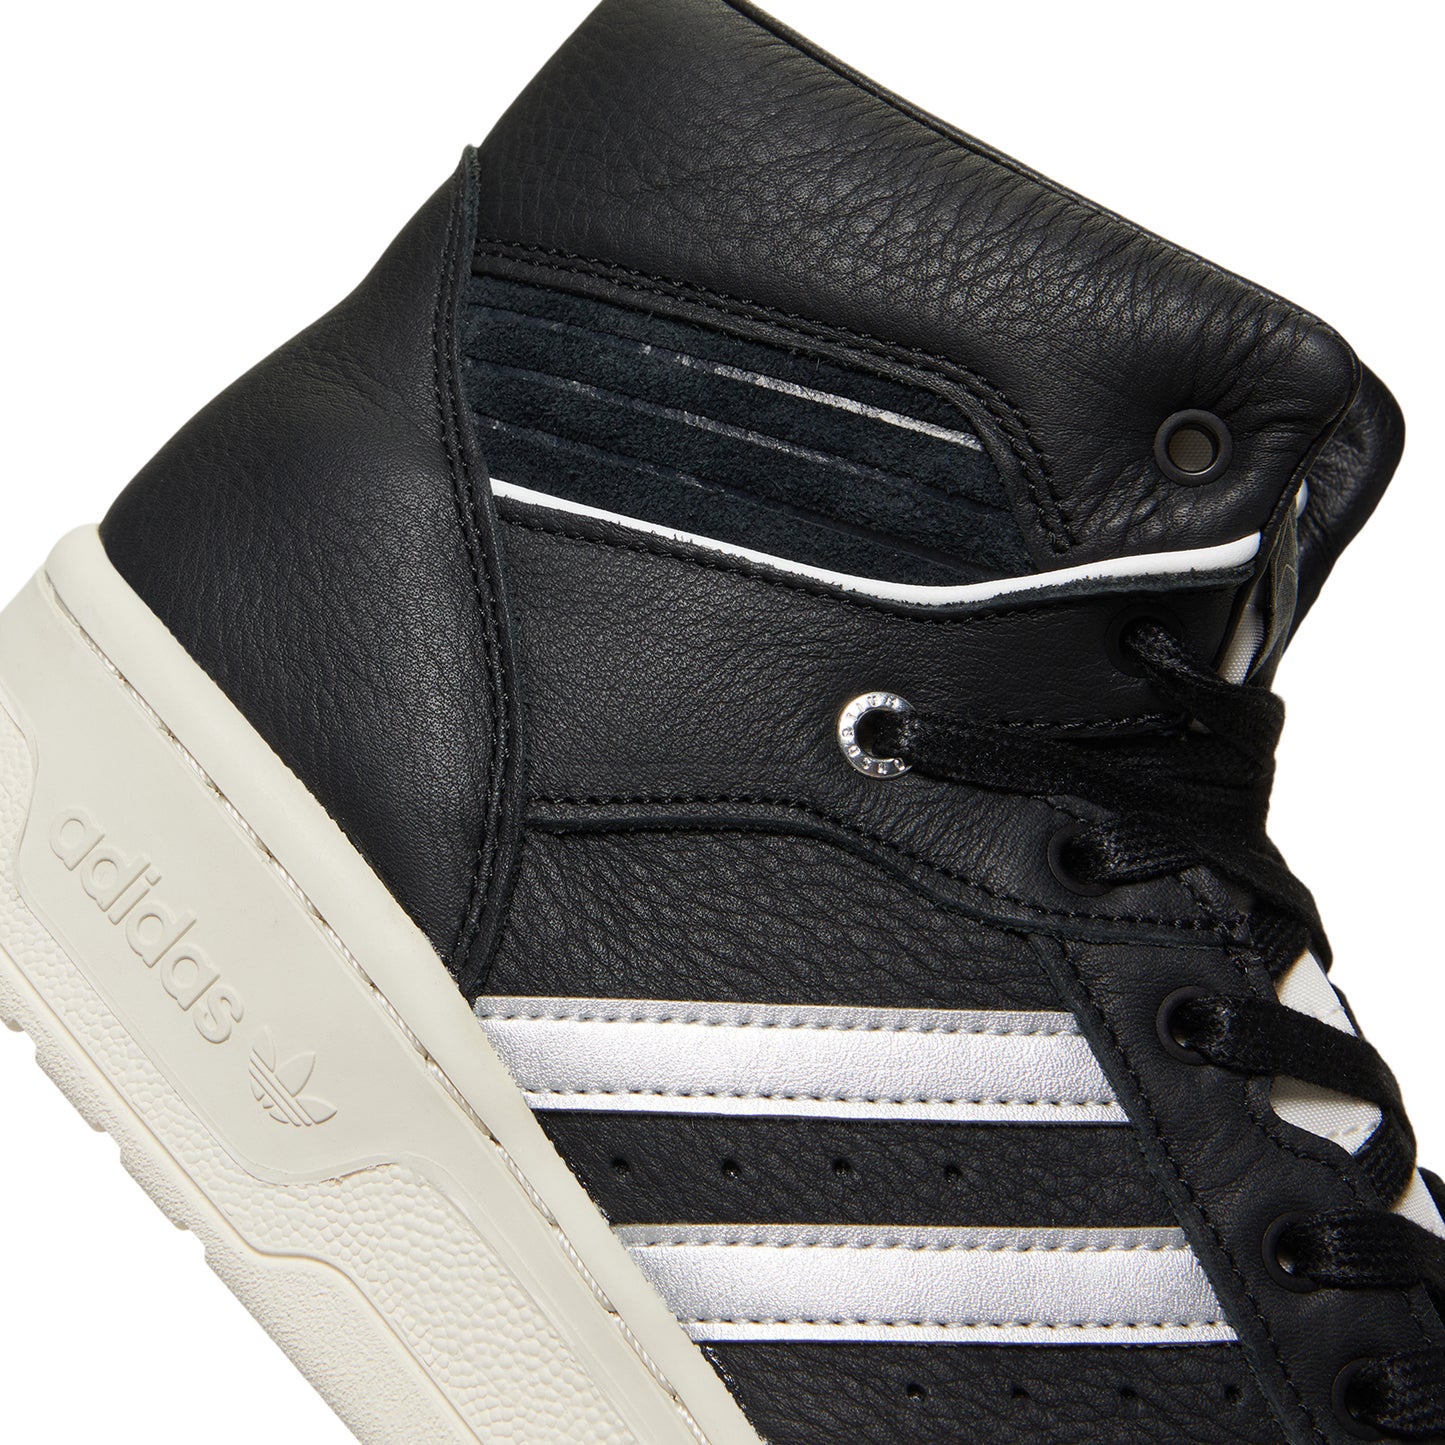 Adidas Rivalry HI Consortium (Core Black/White)